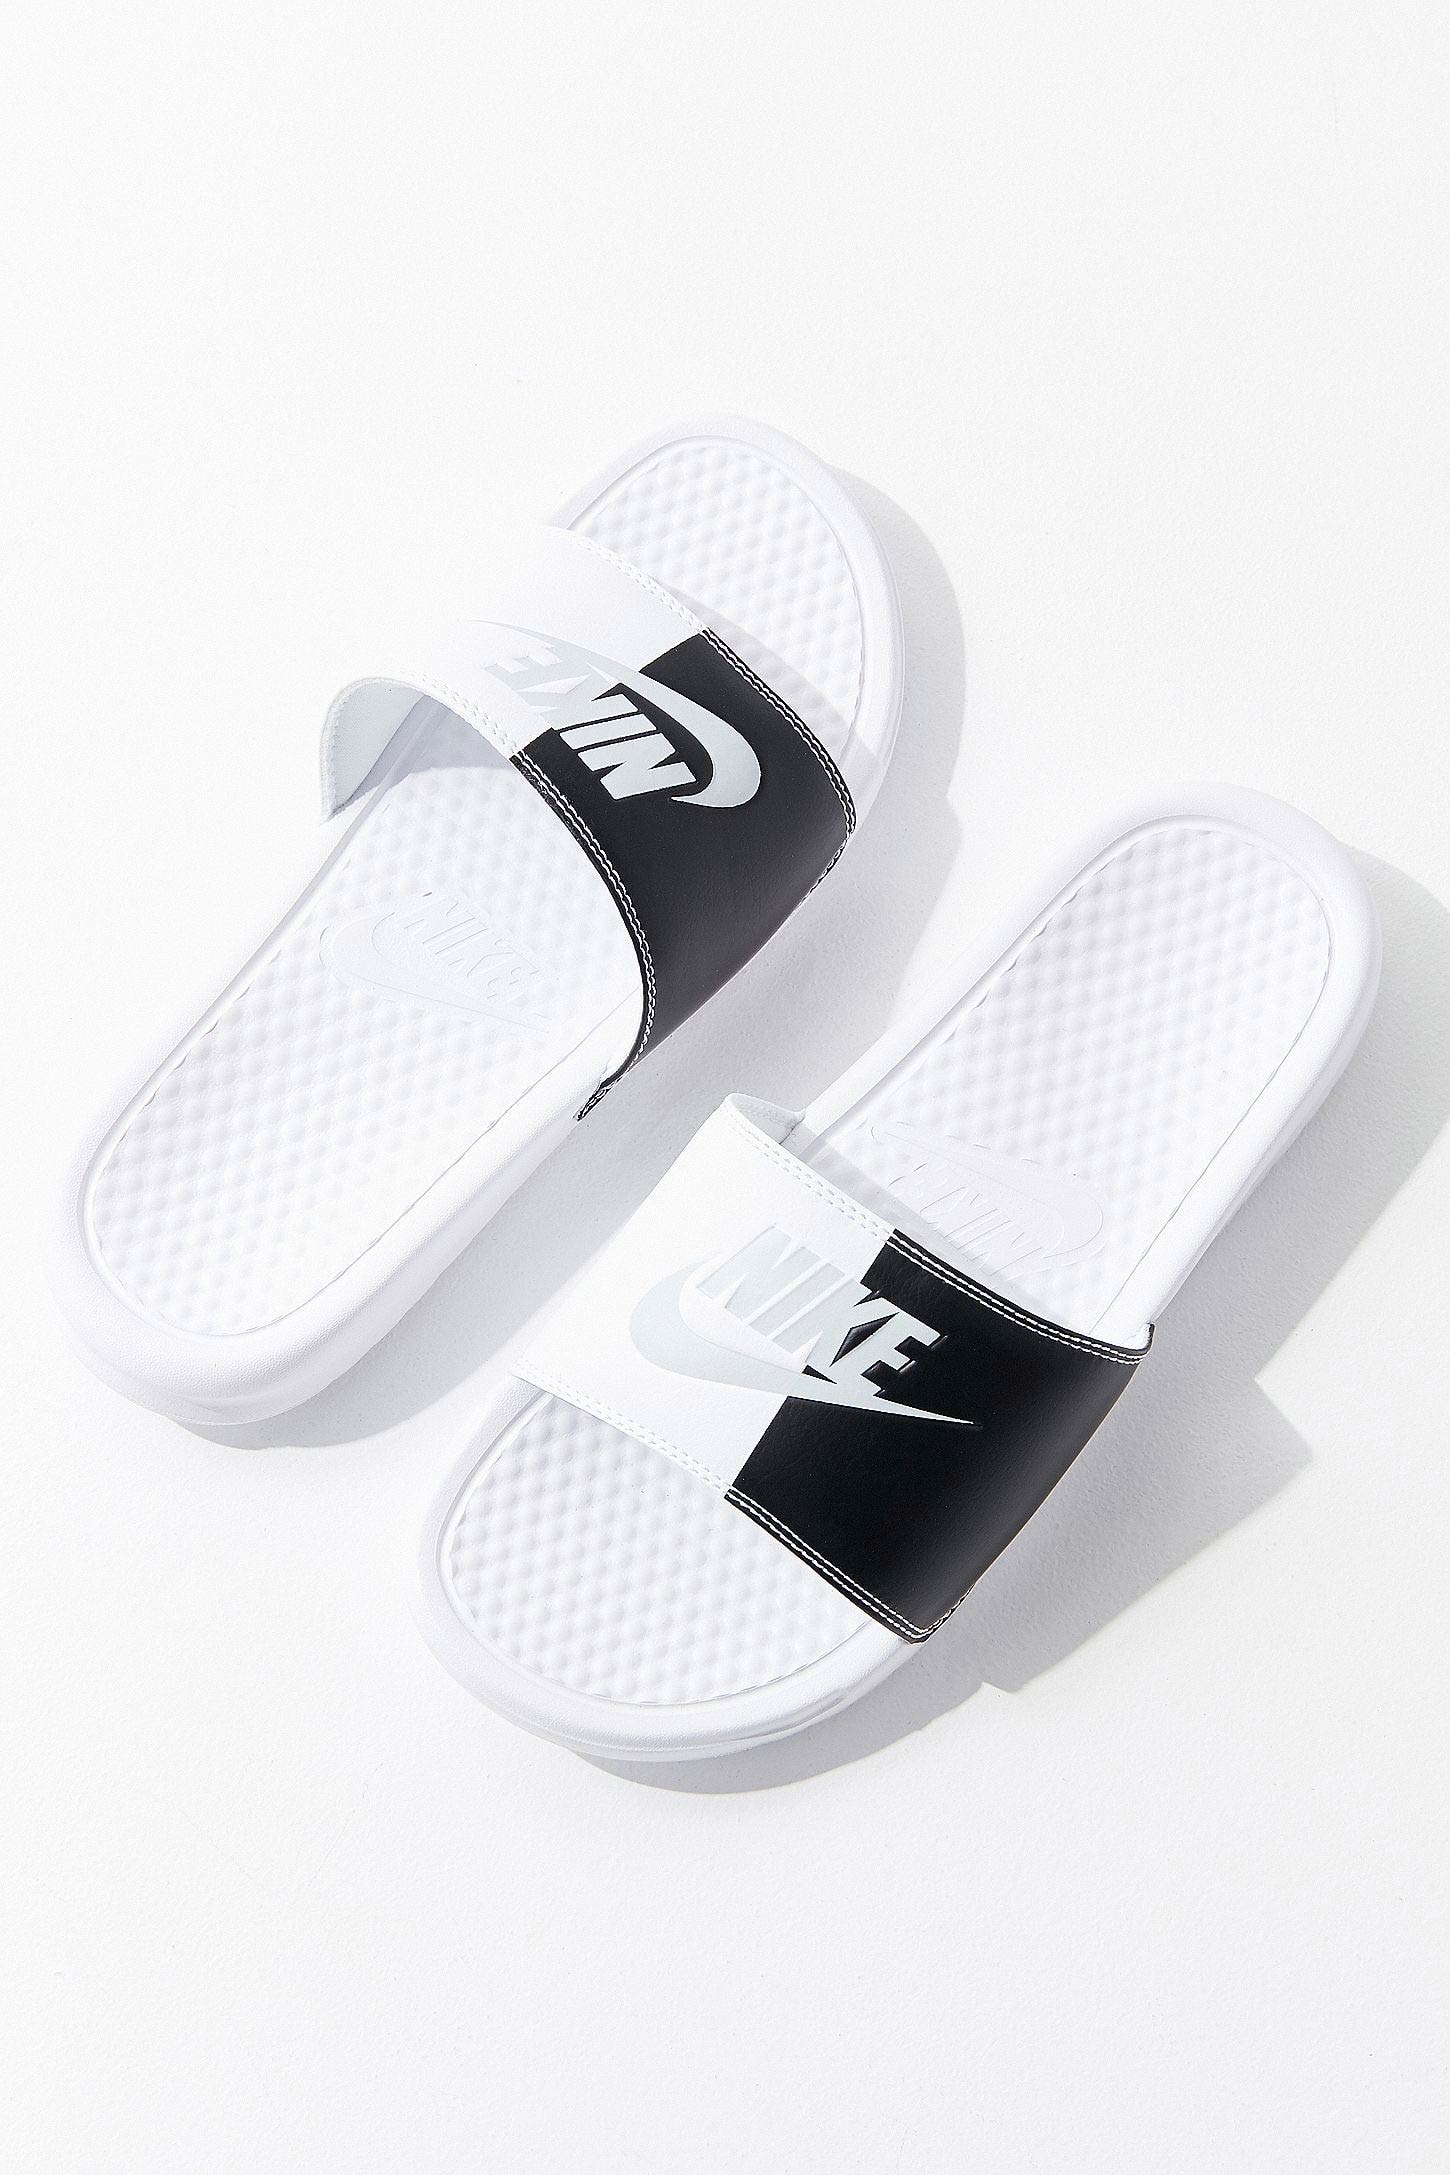 Nike Benassi JDI Colorblock Slide Black White